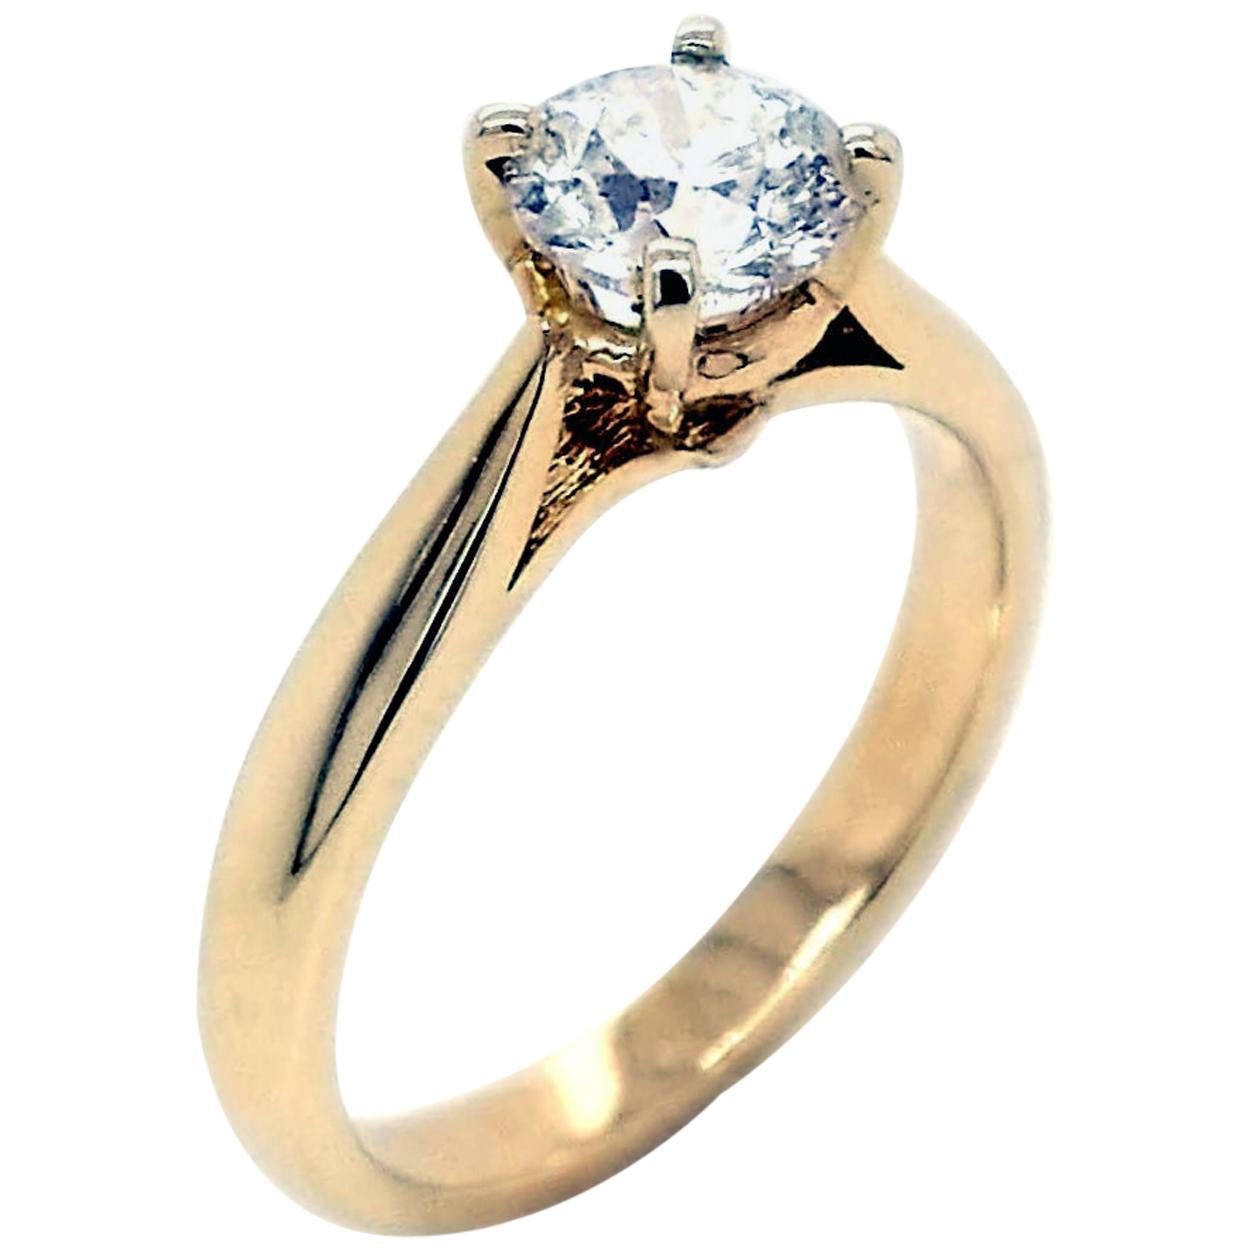 Bague solitaire en or 14 carats avec diamants ronds brillants G-H/SI3 de 0,97 carat certifiés EGL US